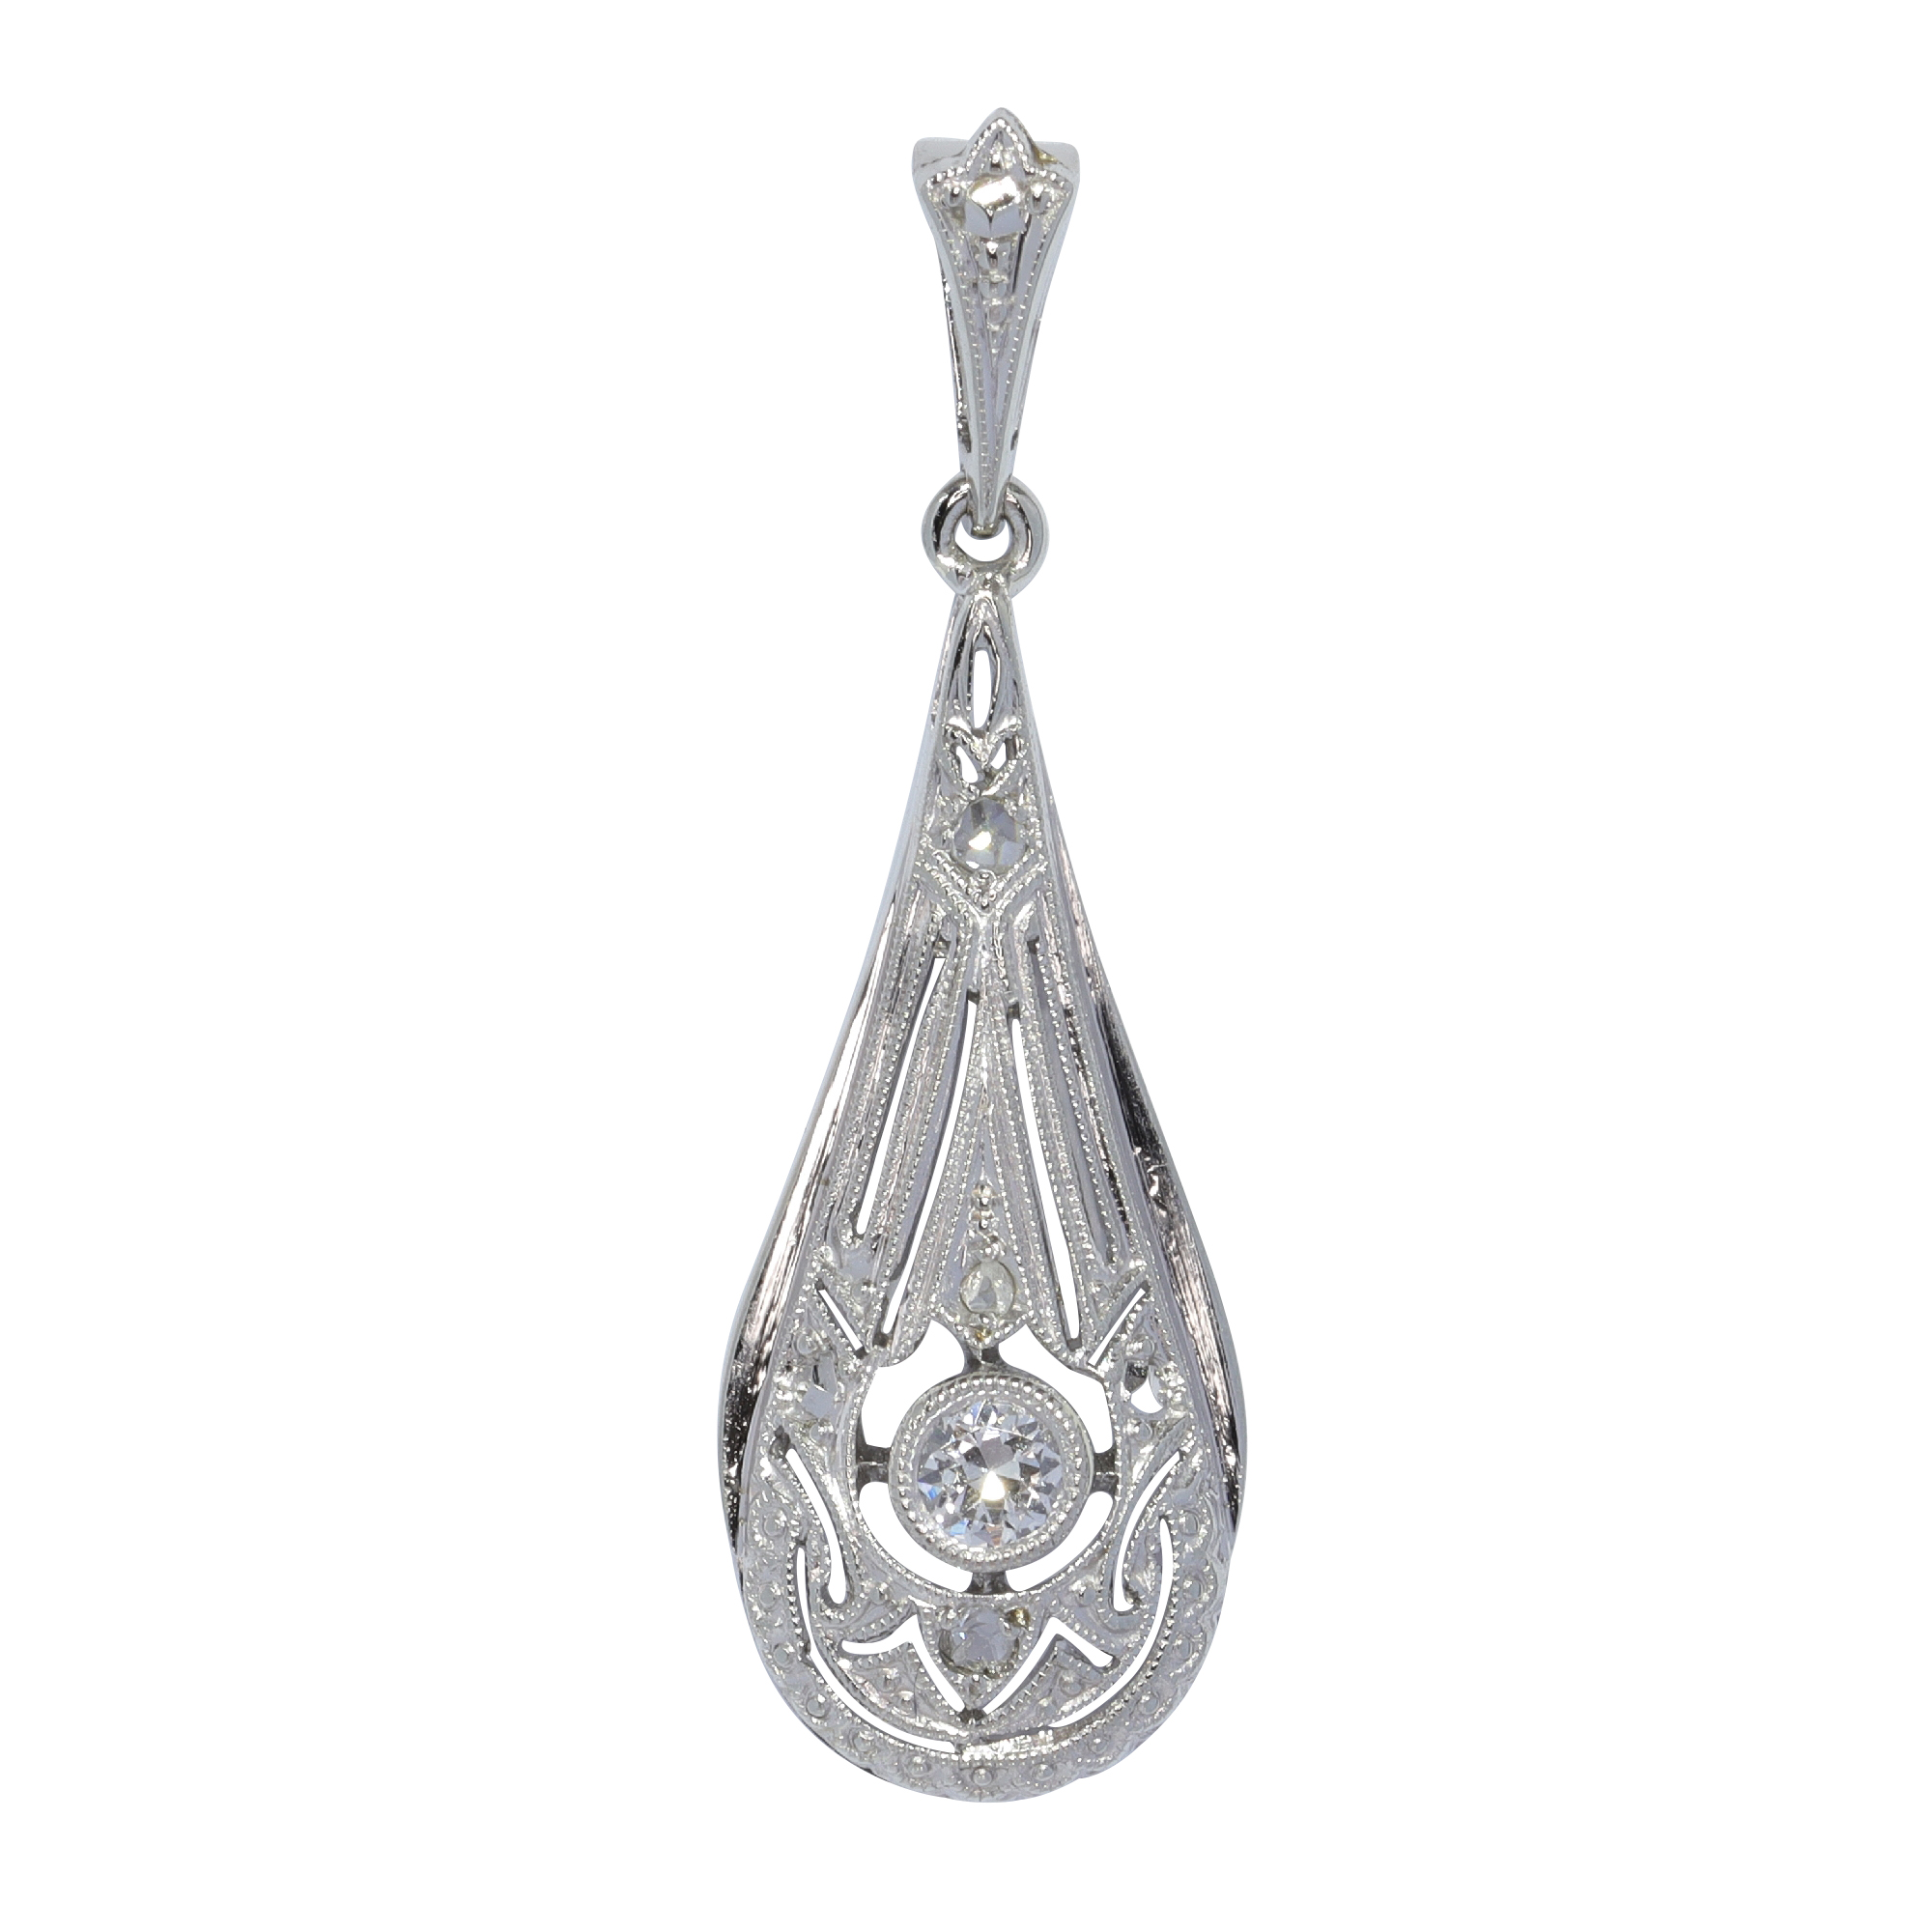 Vintage 1920's Edwardian/Art Deco diamond pendant